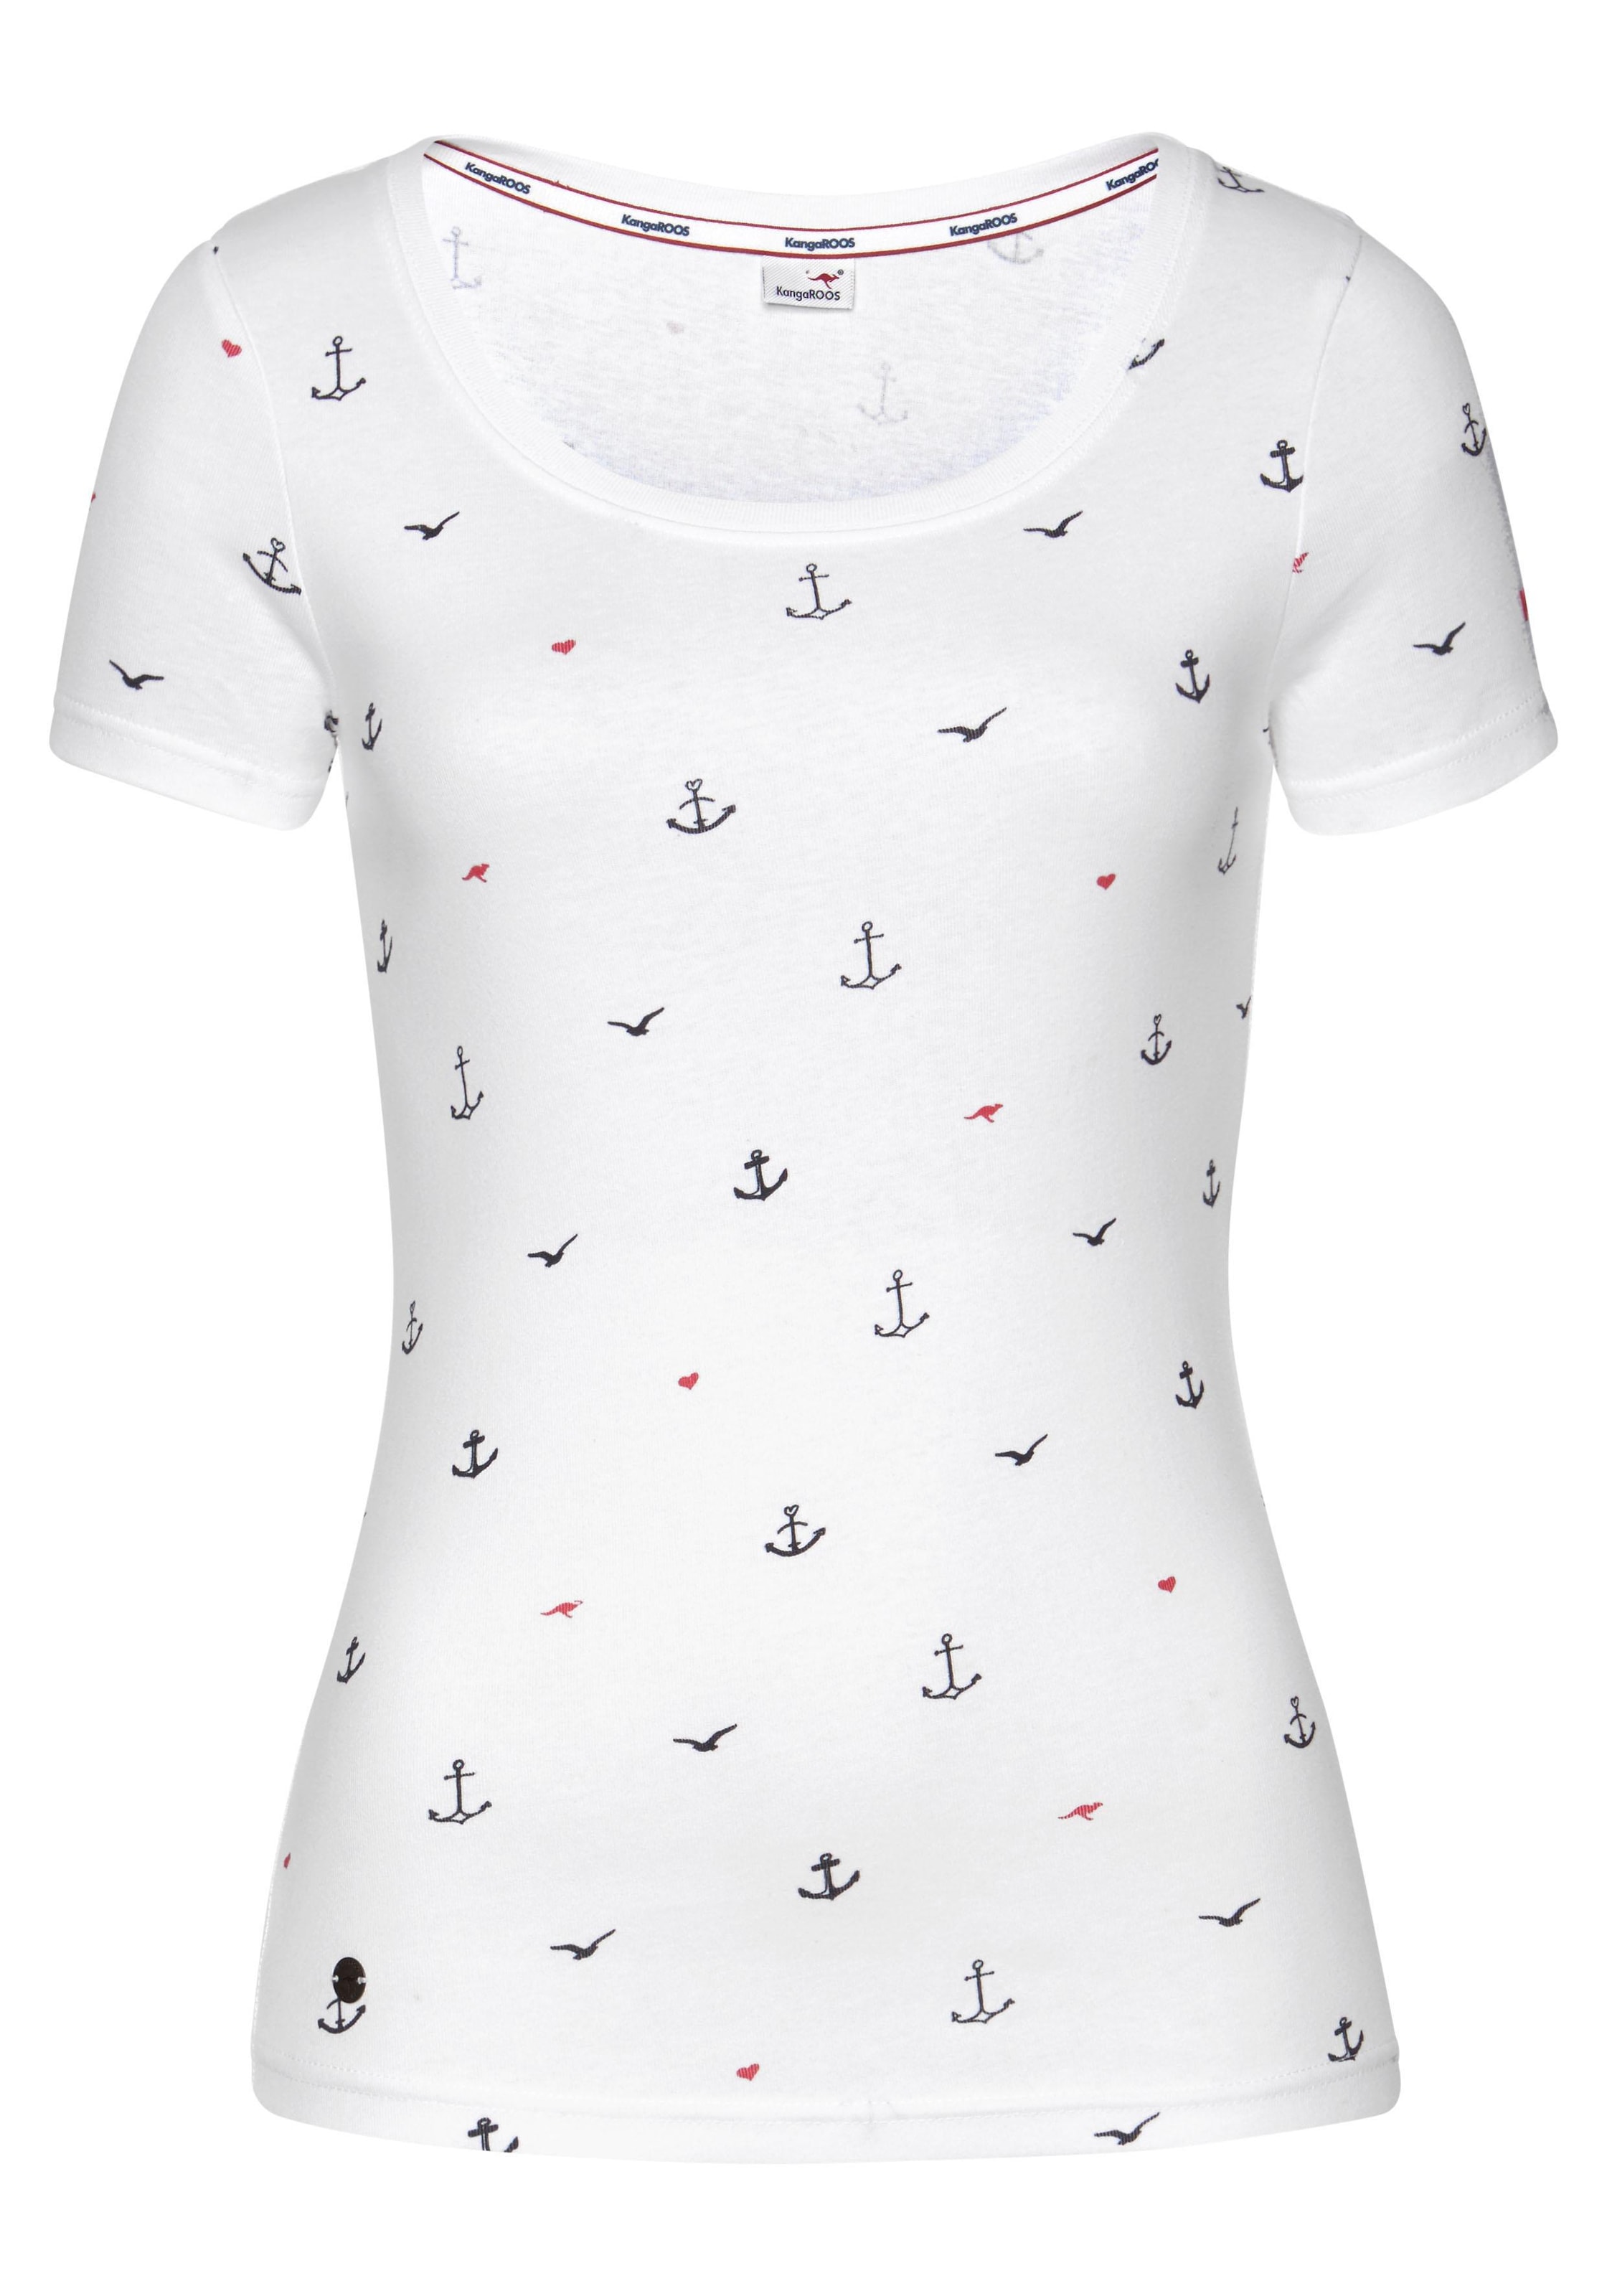 KangaROOS T-Shirt, shoppen mit Schiffchen Reh-Print Anker, oder